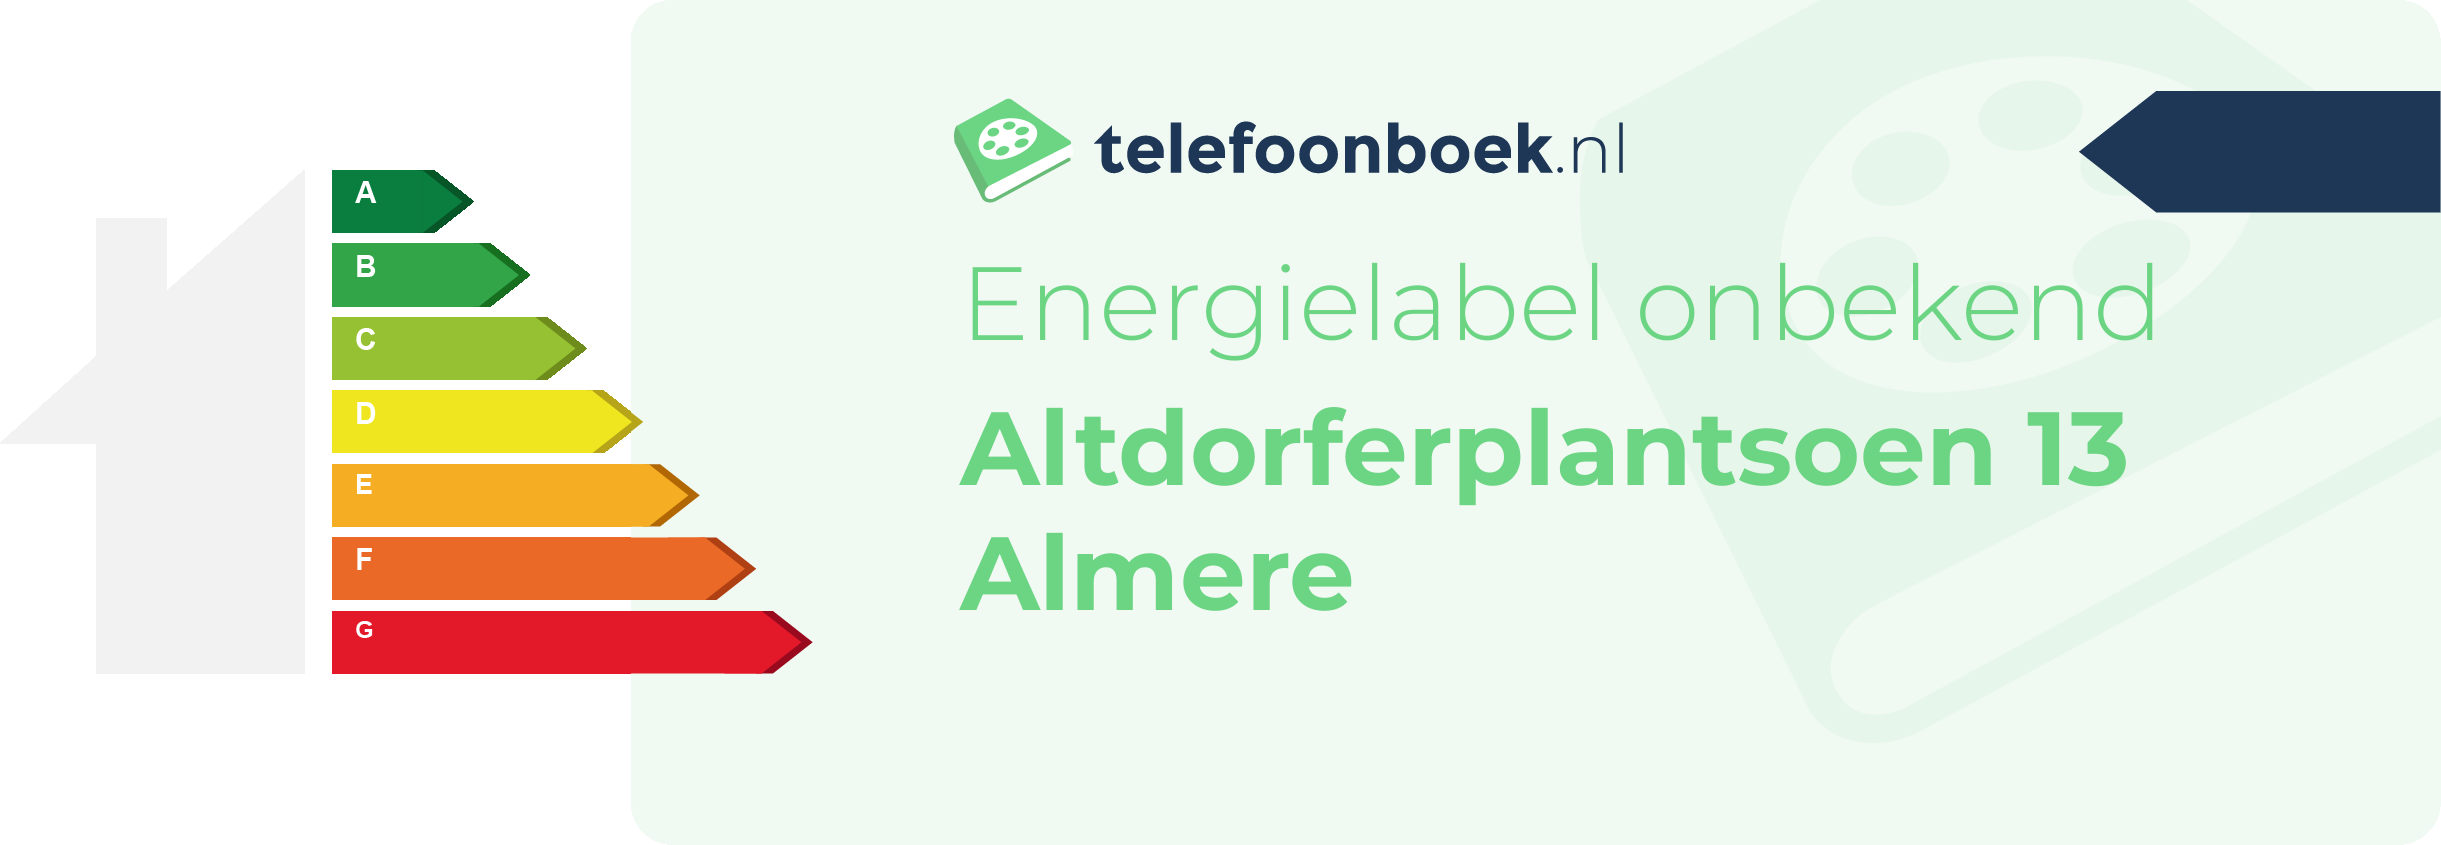 Energielabel Altdorferplantsoen 13 Almere